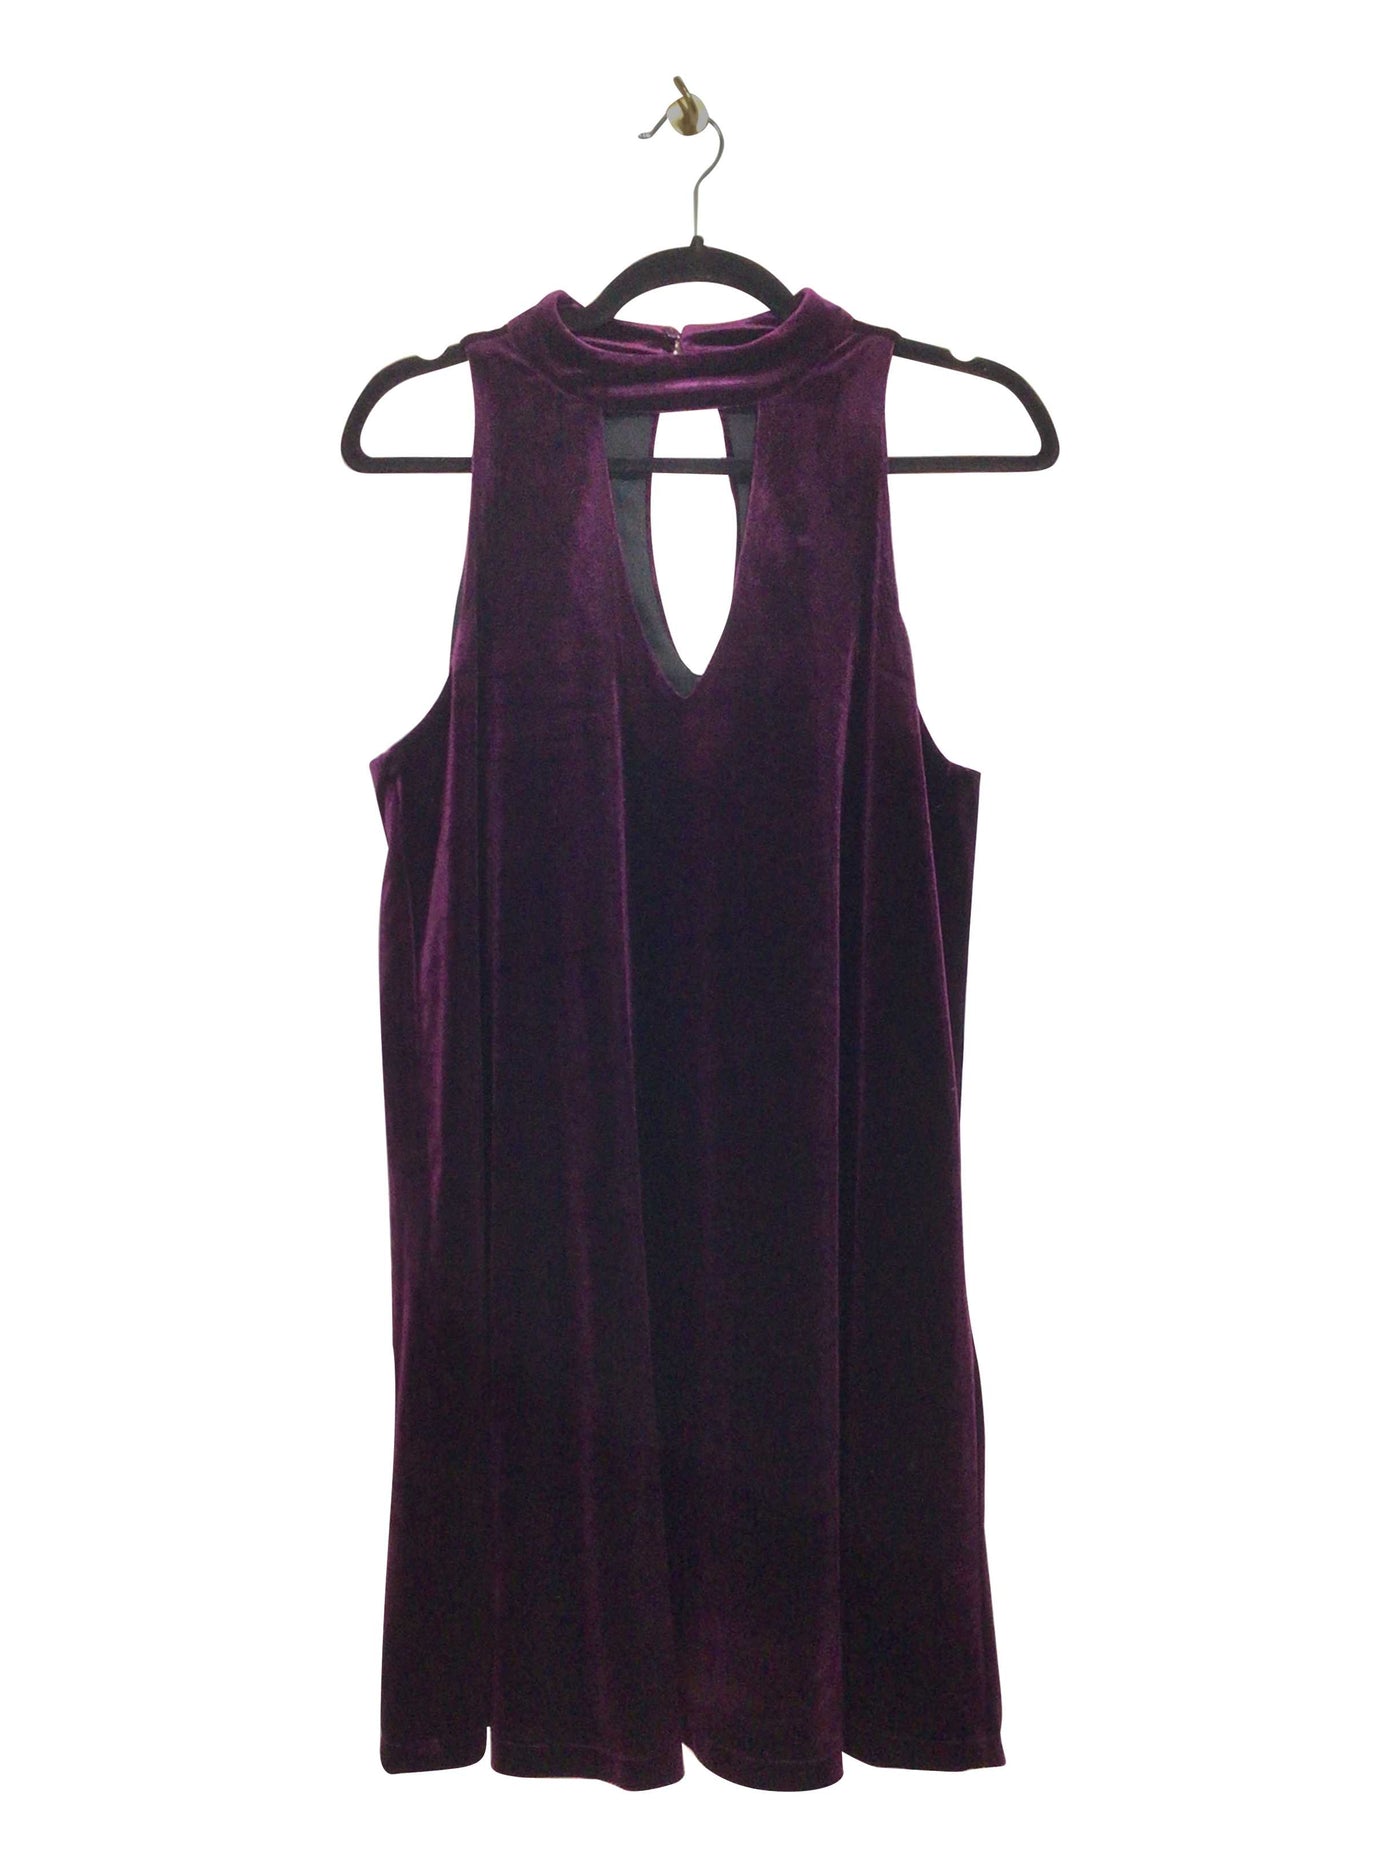 DO & BE Regular fit Mini Dress in Purple  -  M  44.36 Koop